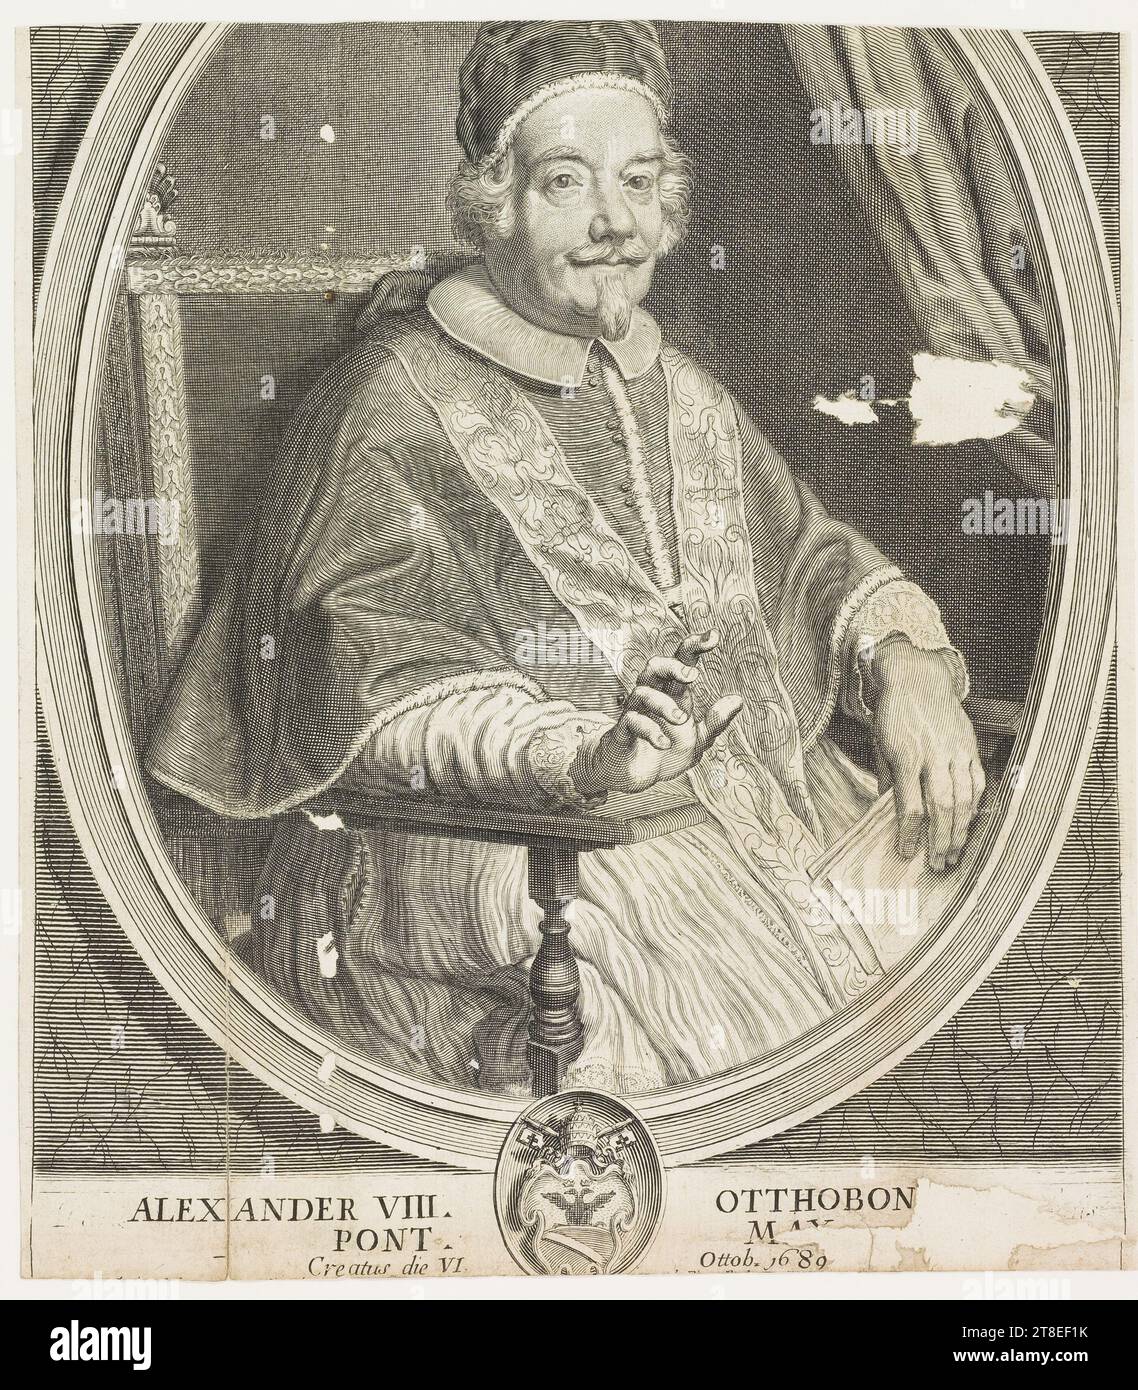 part of print cut away. ALEXANDER VIII OTTHOBON BRIDGE. MAX. Creatus die VI Ottob. 1689 Stock Photo